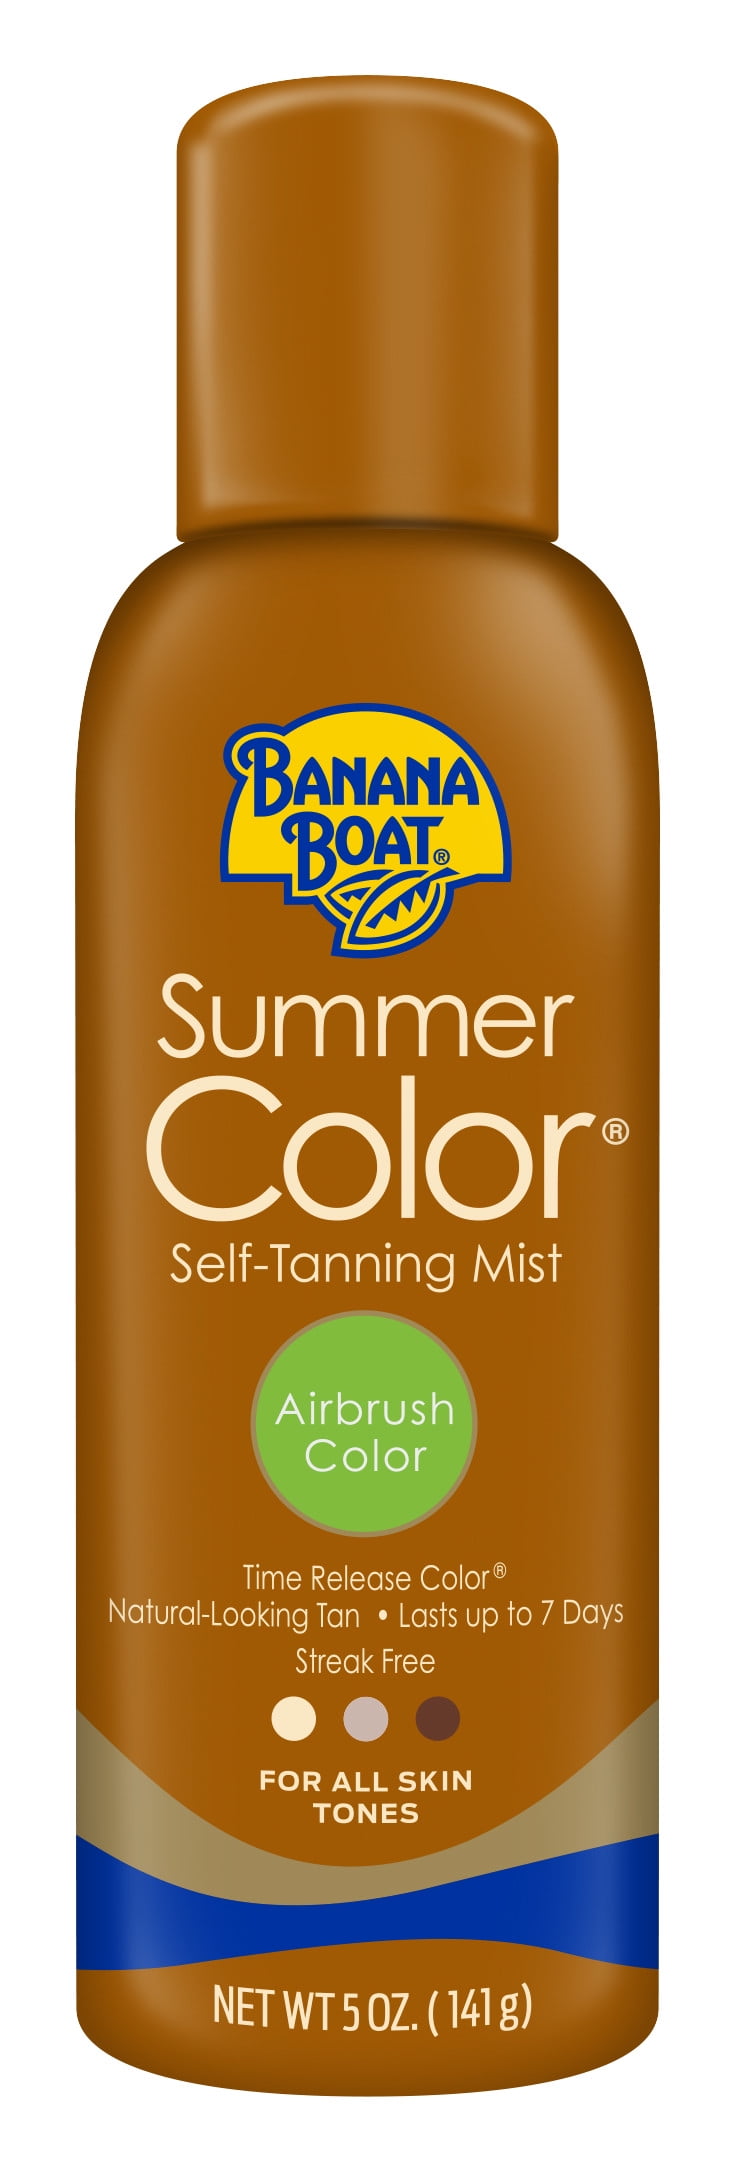 Banana Boat Summer Color Body Self-Tanner Mist, Airbrush Color, 5 oz